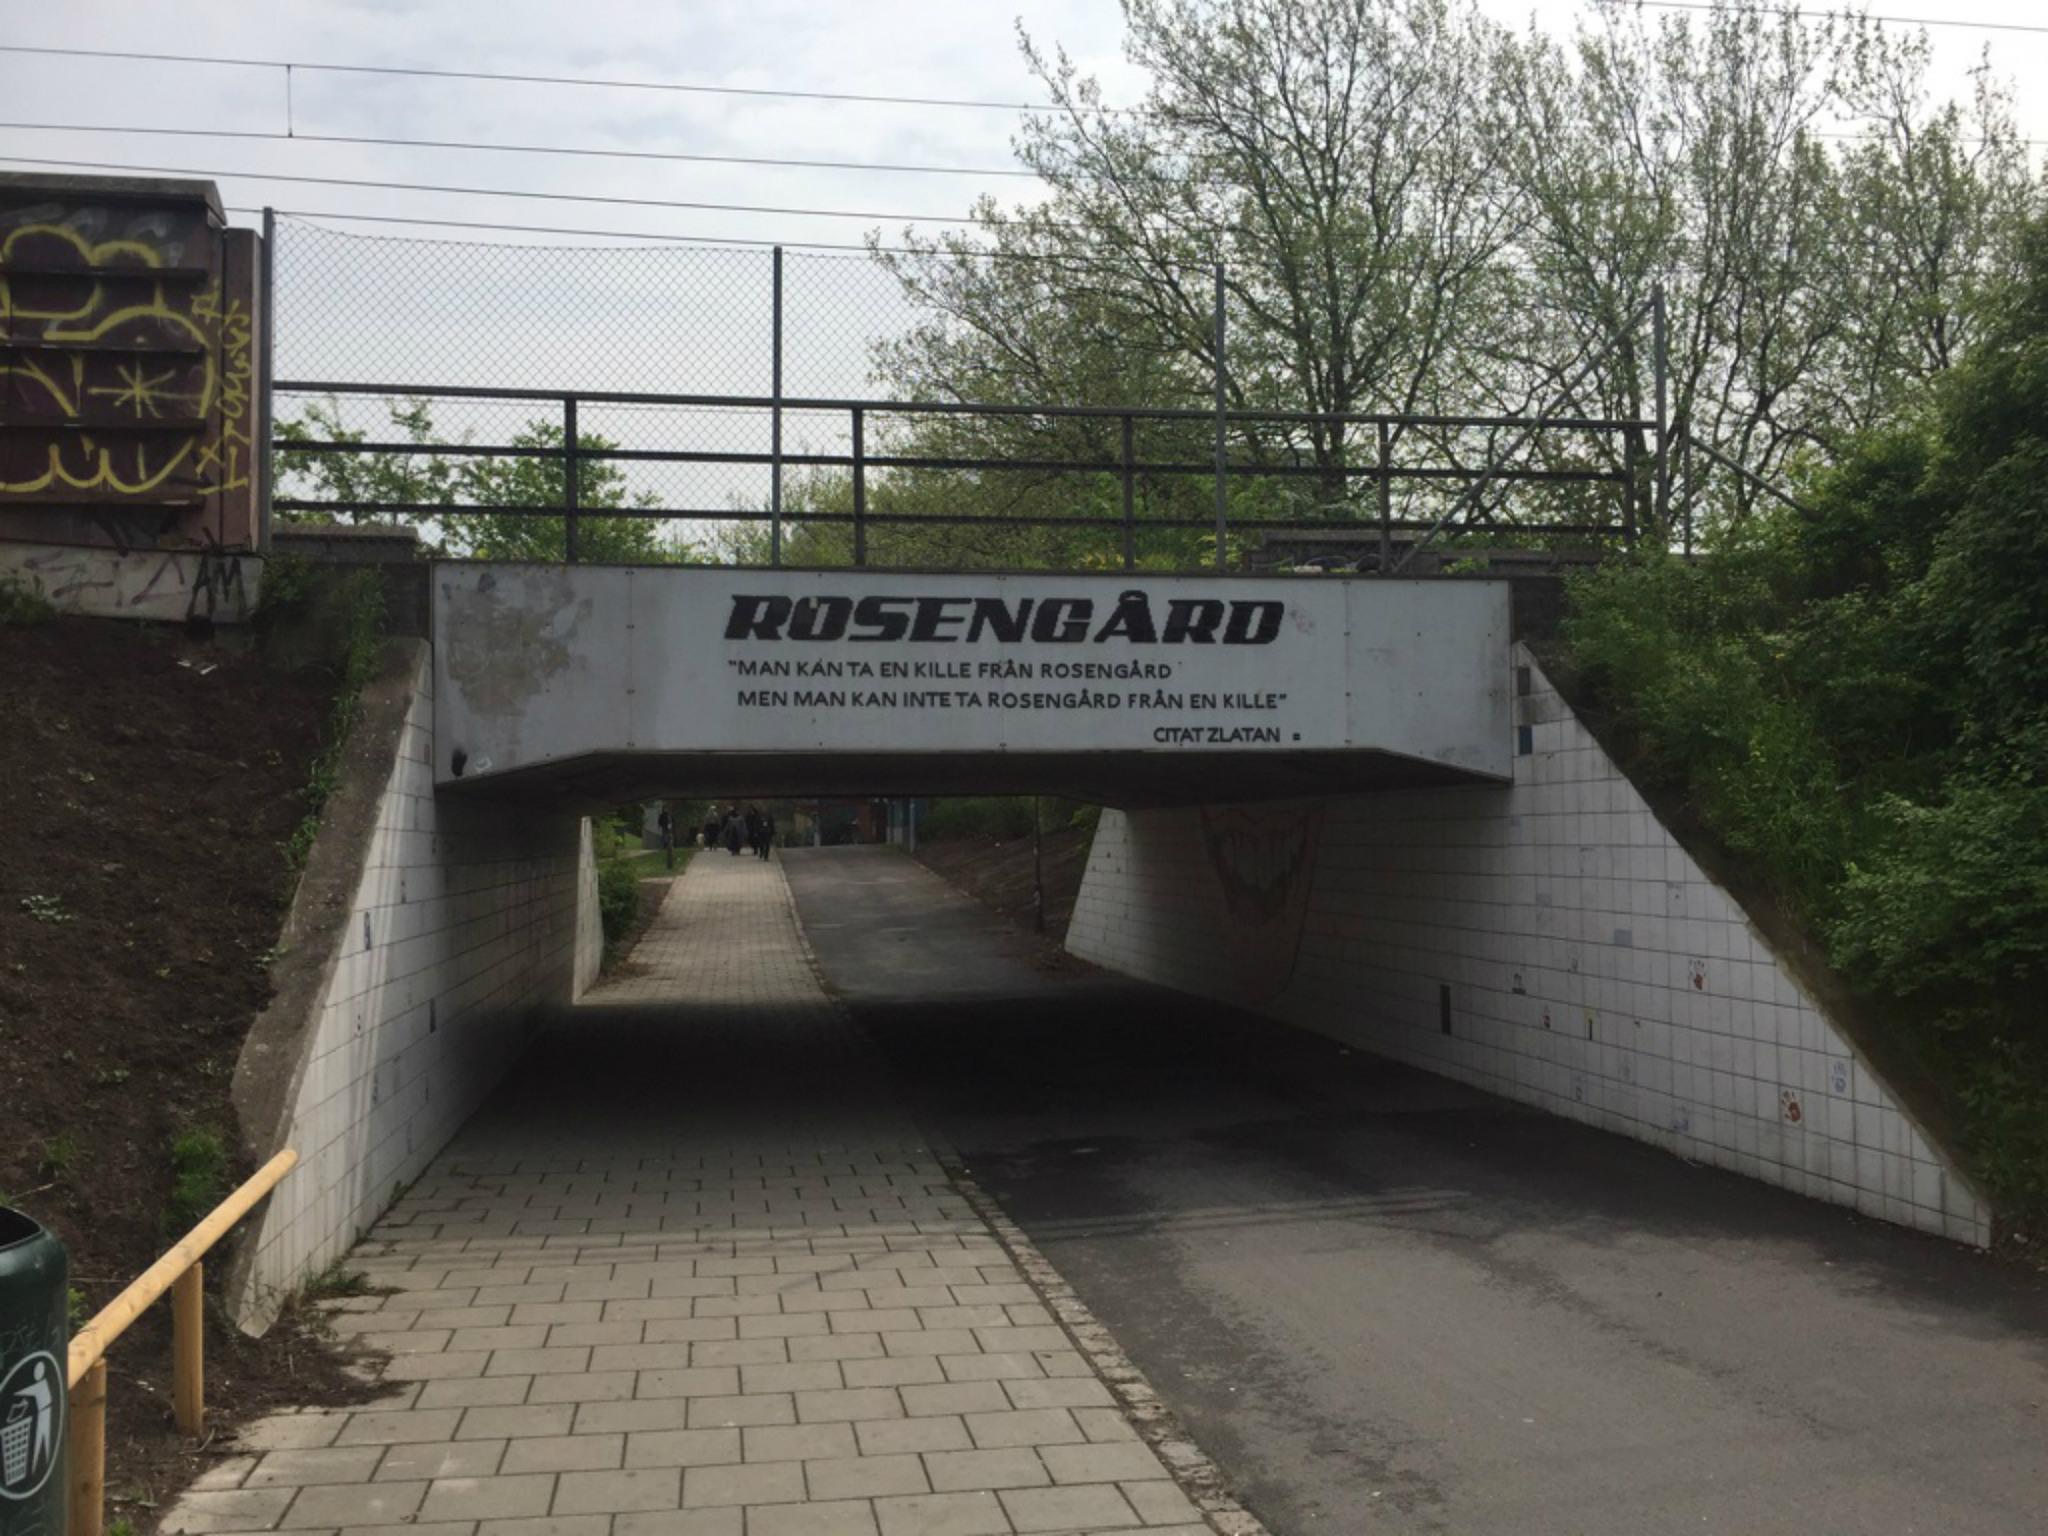 Мост в Русенгорде